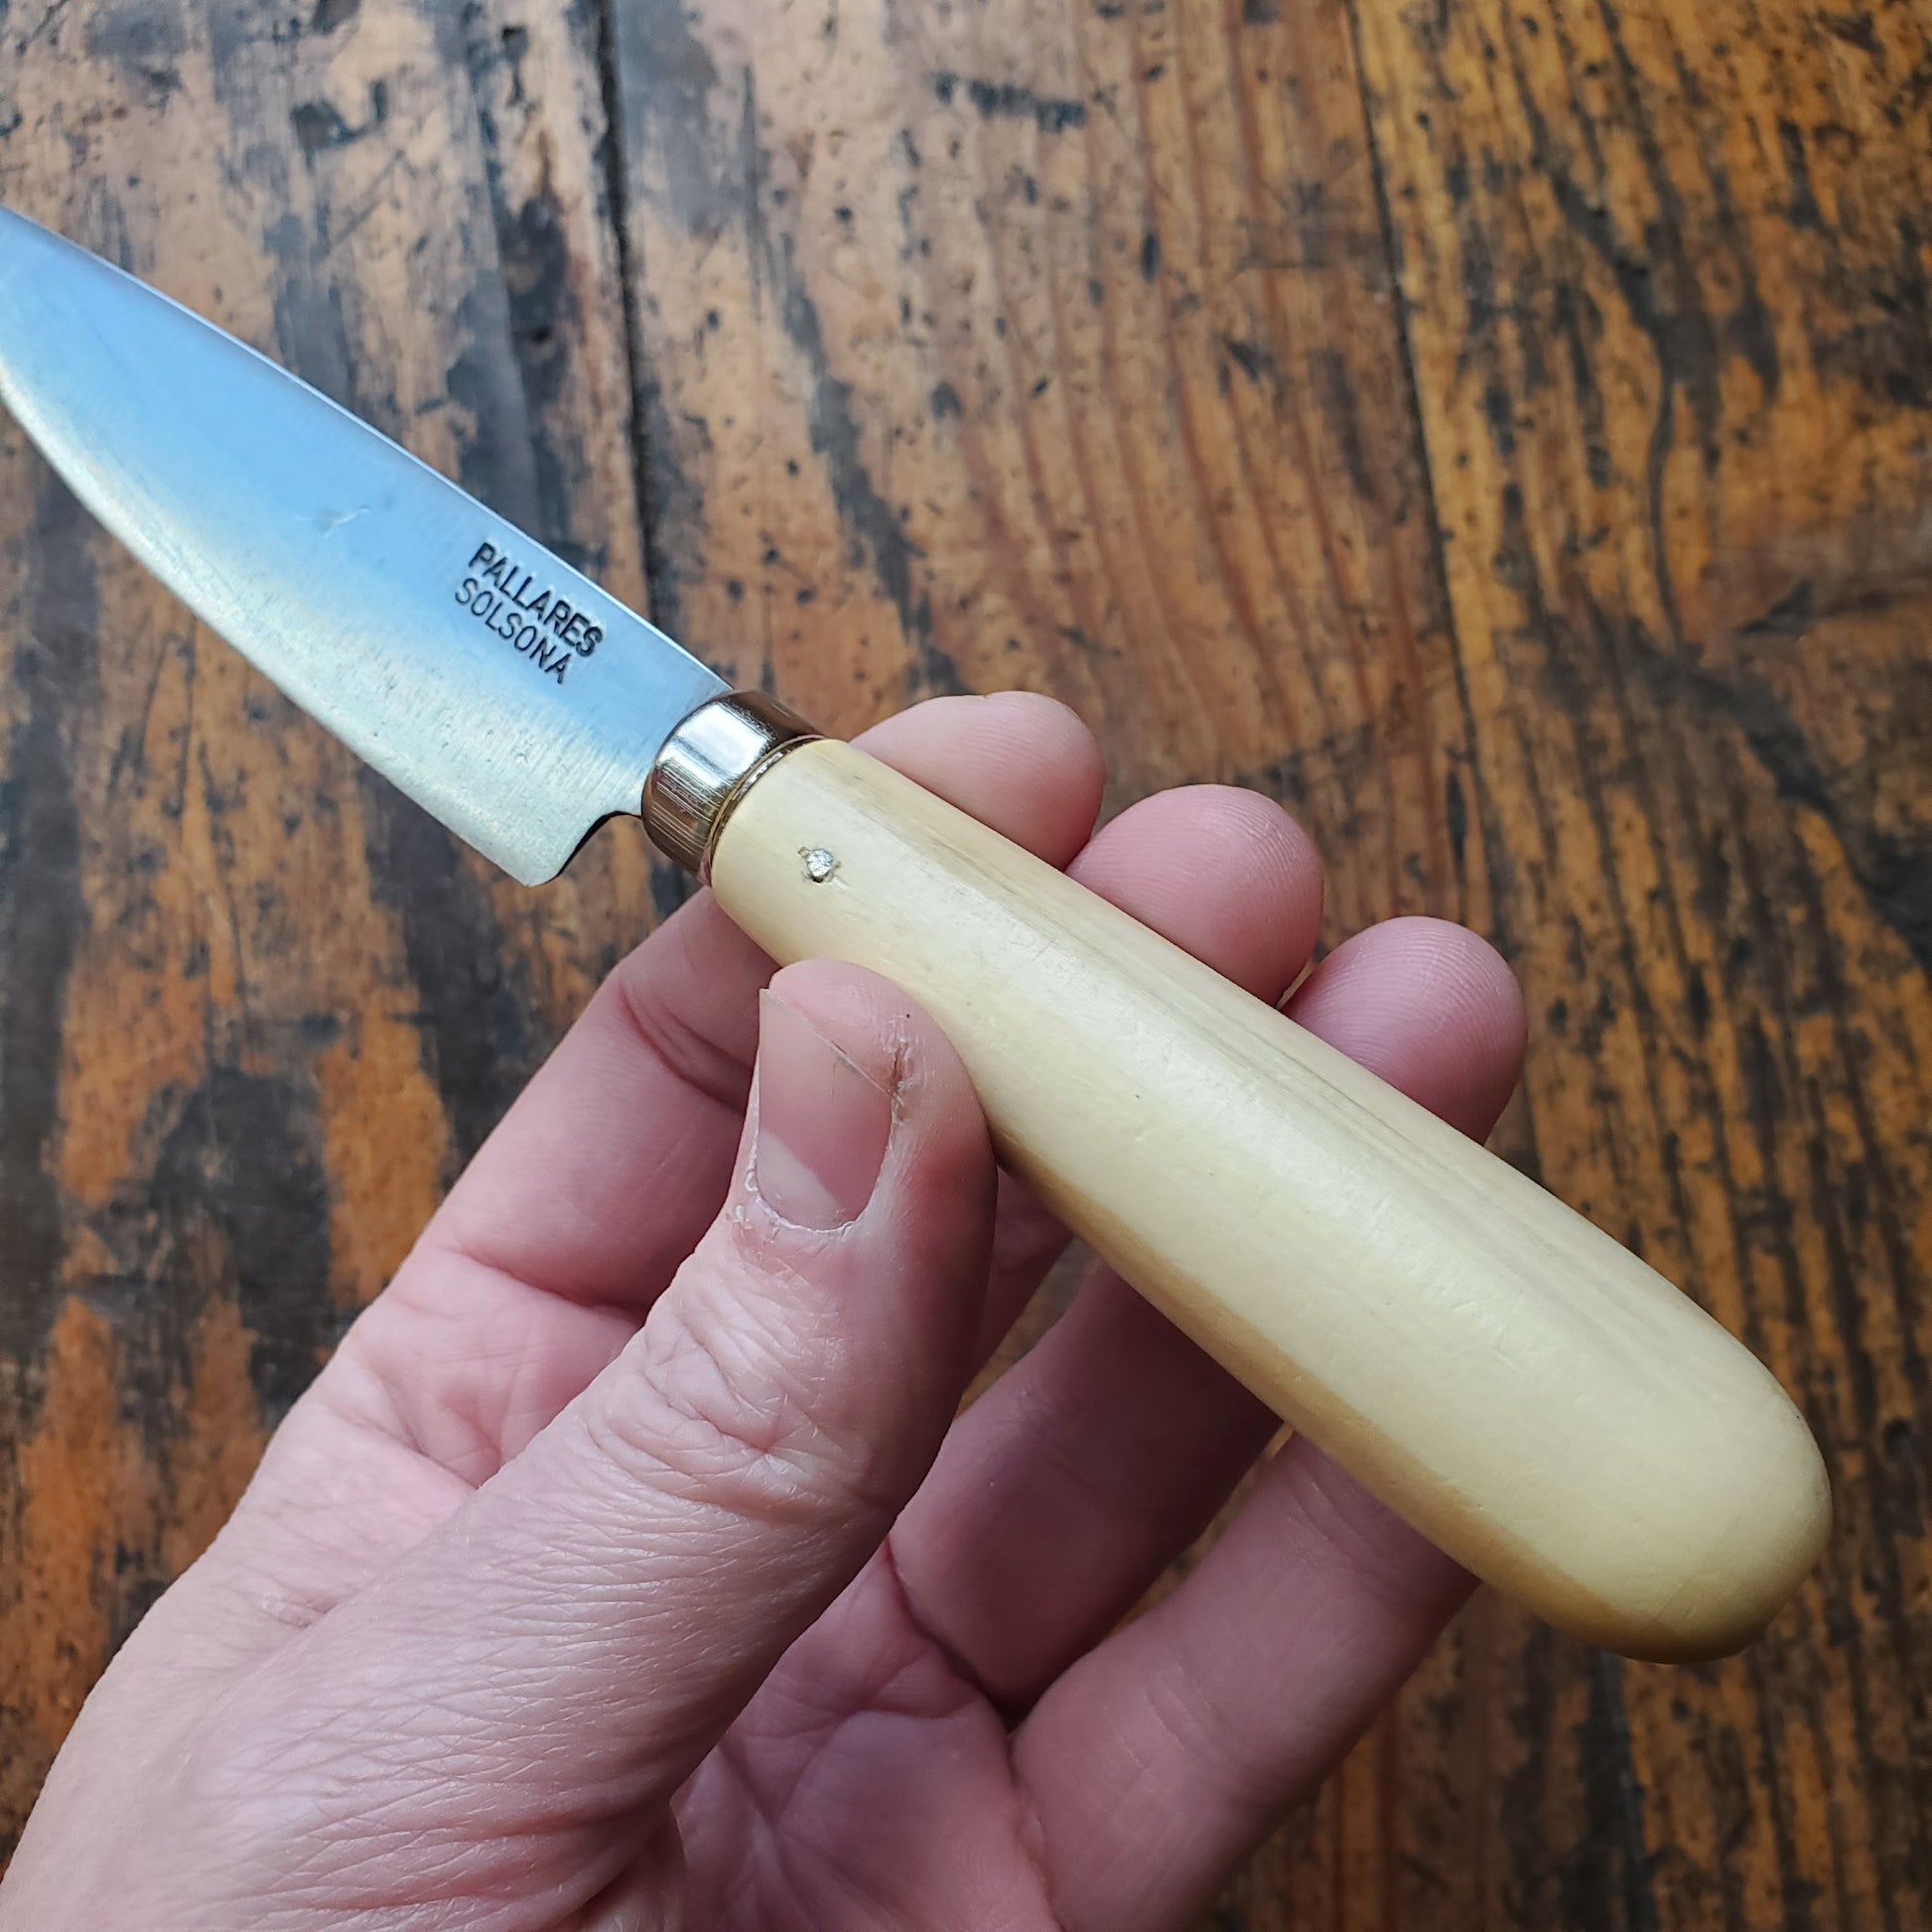 Pallares Solsona - old school carbon steel kitchen knife 